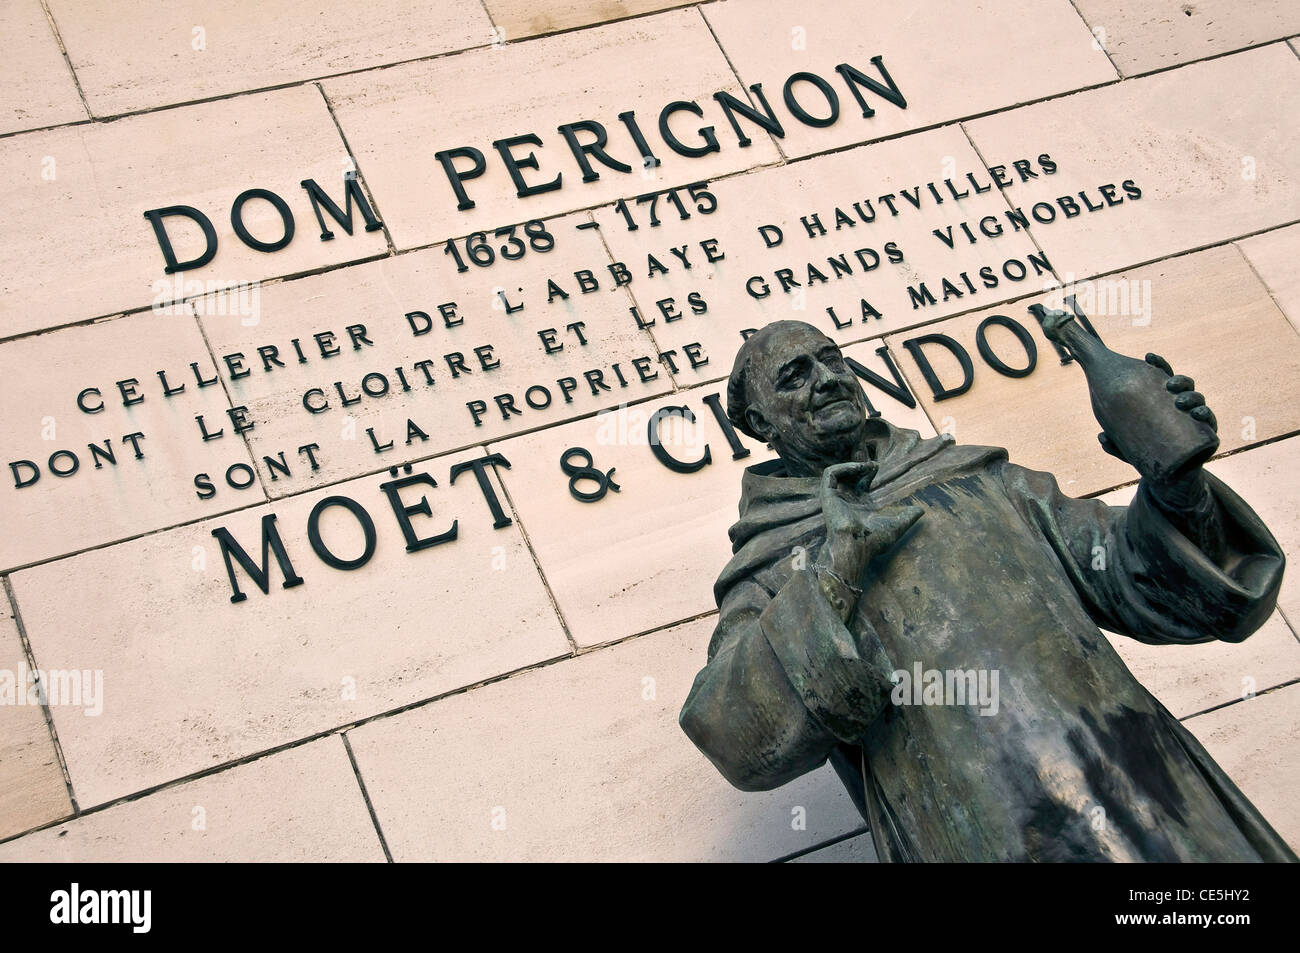 Dom Pérignon statue - Moët & Chandon cellar, Epernay (France) Stock Photo